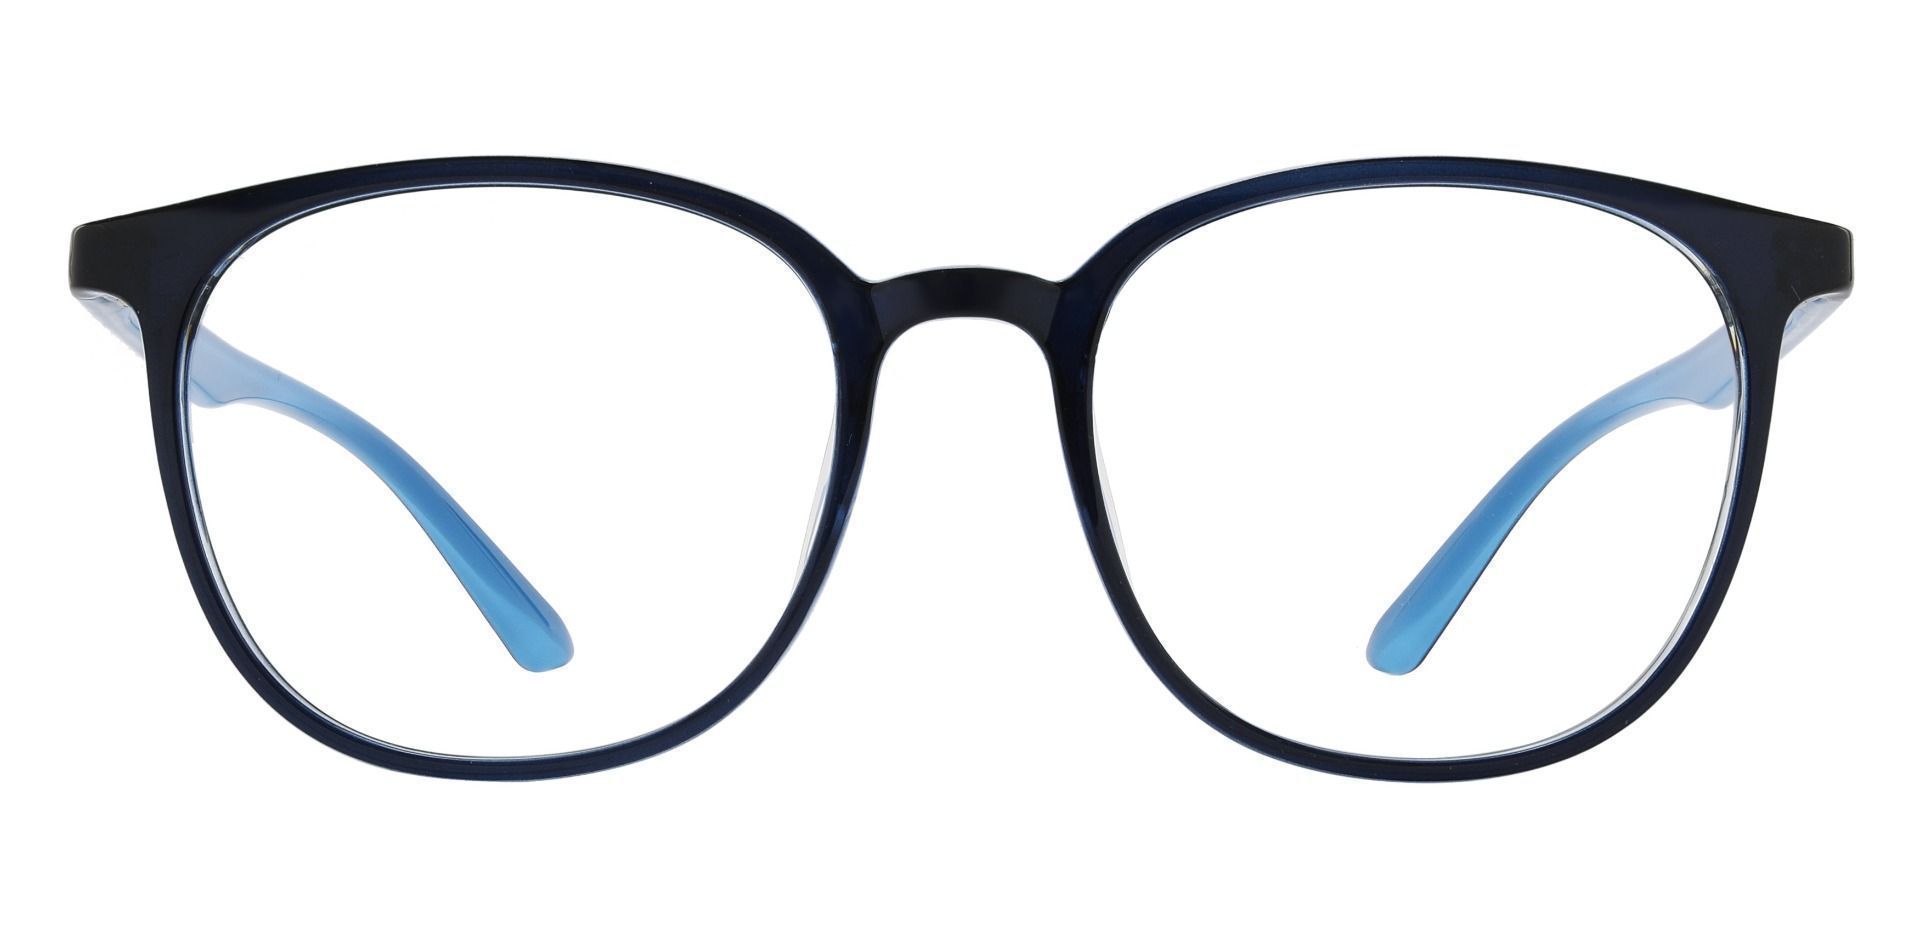 Kelso Square Reading Glasses - Blue